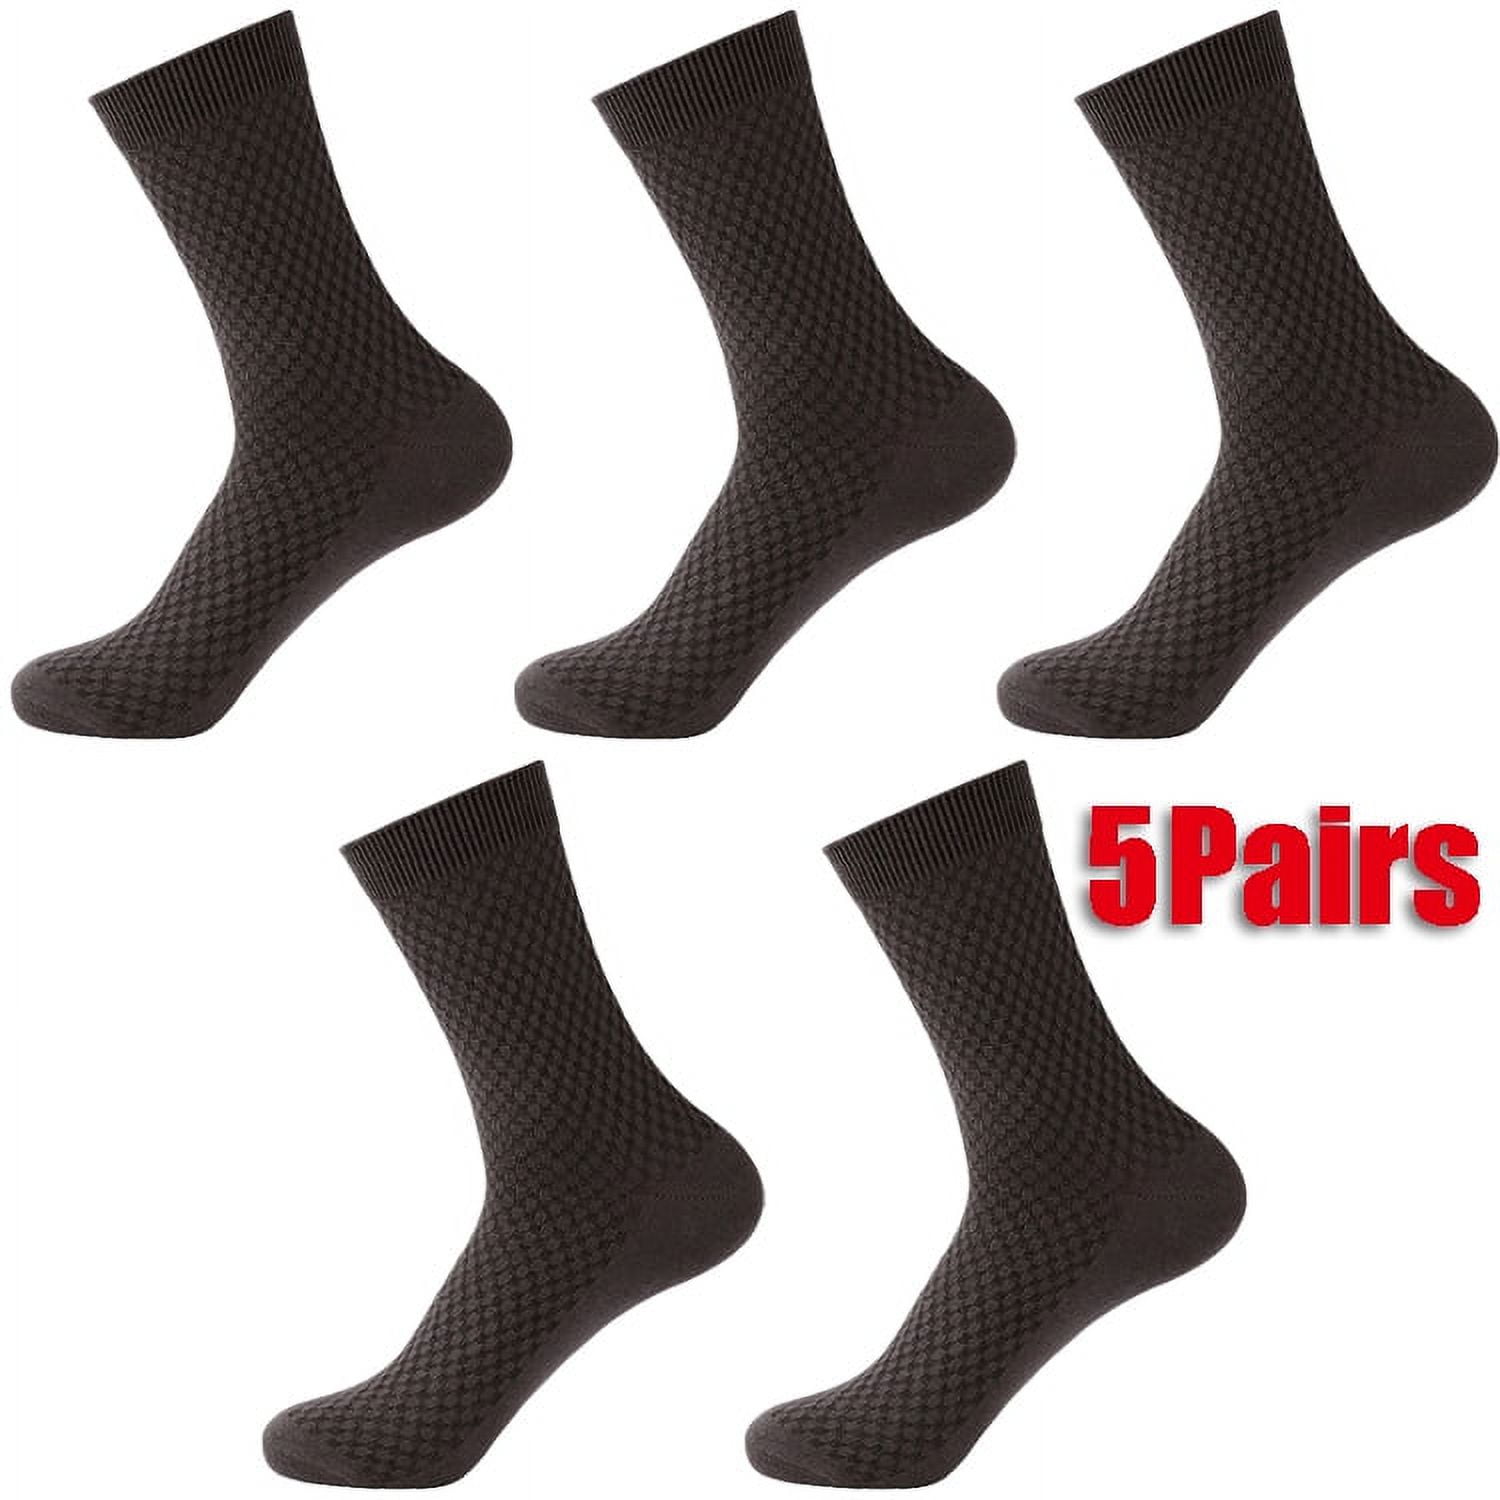 Happon Liner Socks Toe Socks No Show sponge cushion Women's Toeless Half  Socks for High Heels Sandals Sling back Relief Pain (1 nude+ 1 black